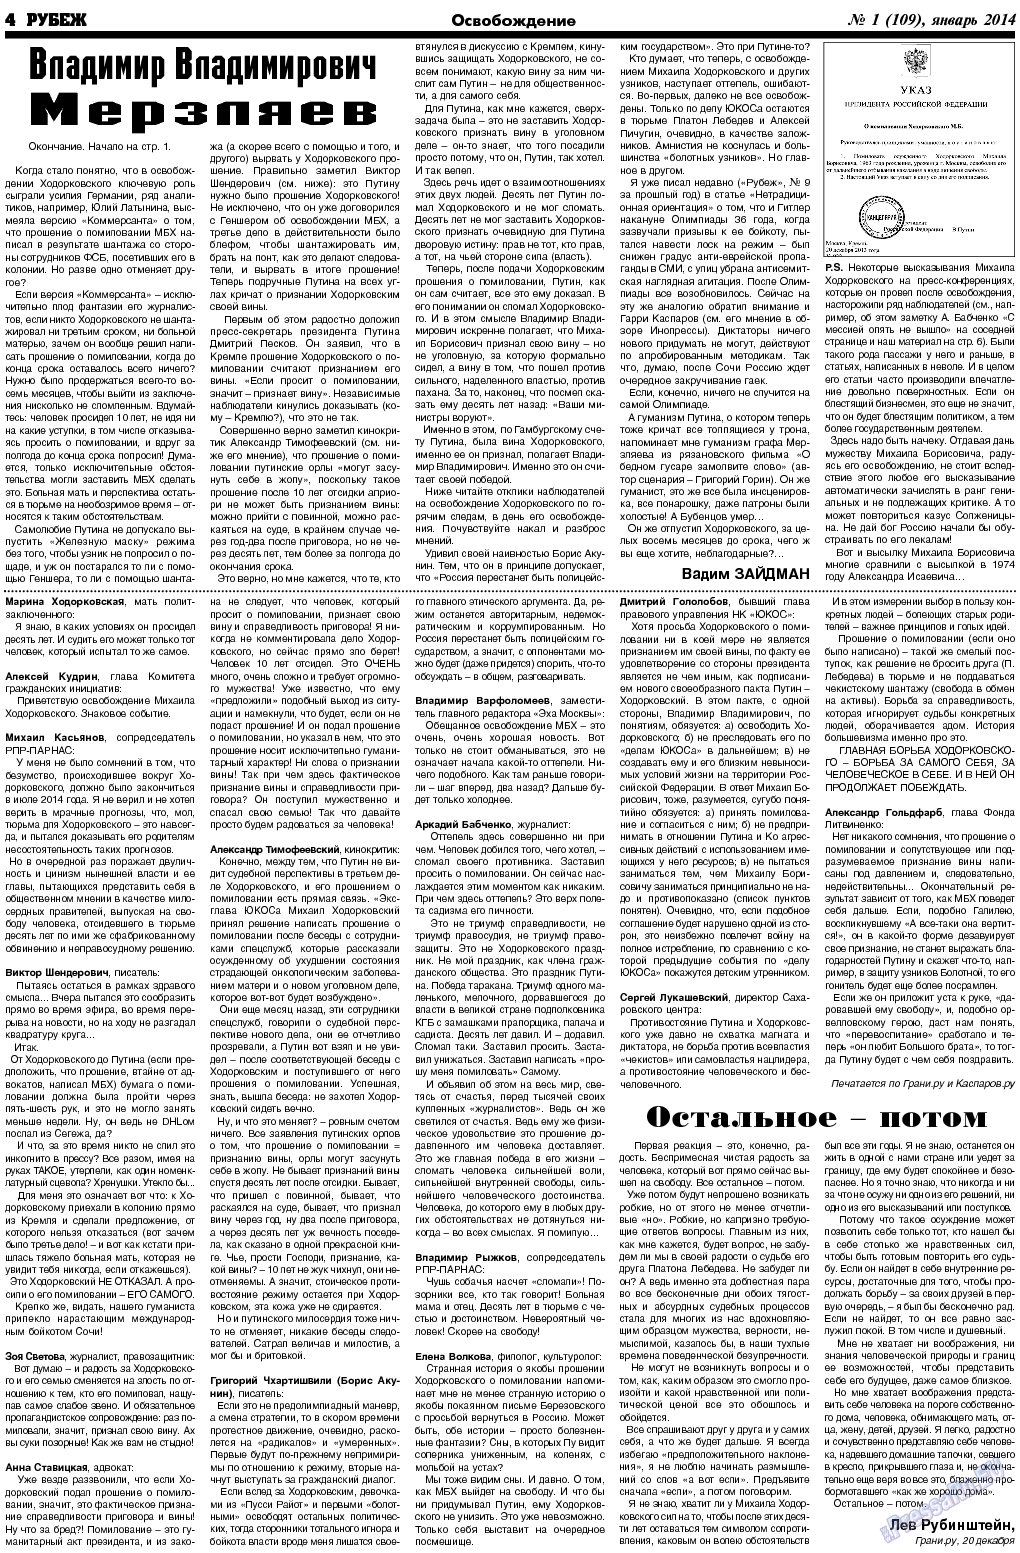 Рубеж, газета. 2014 №1 стр.4